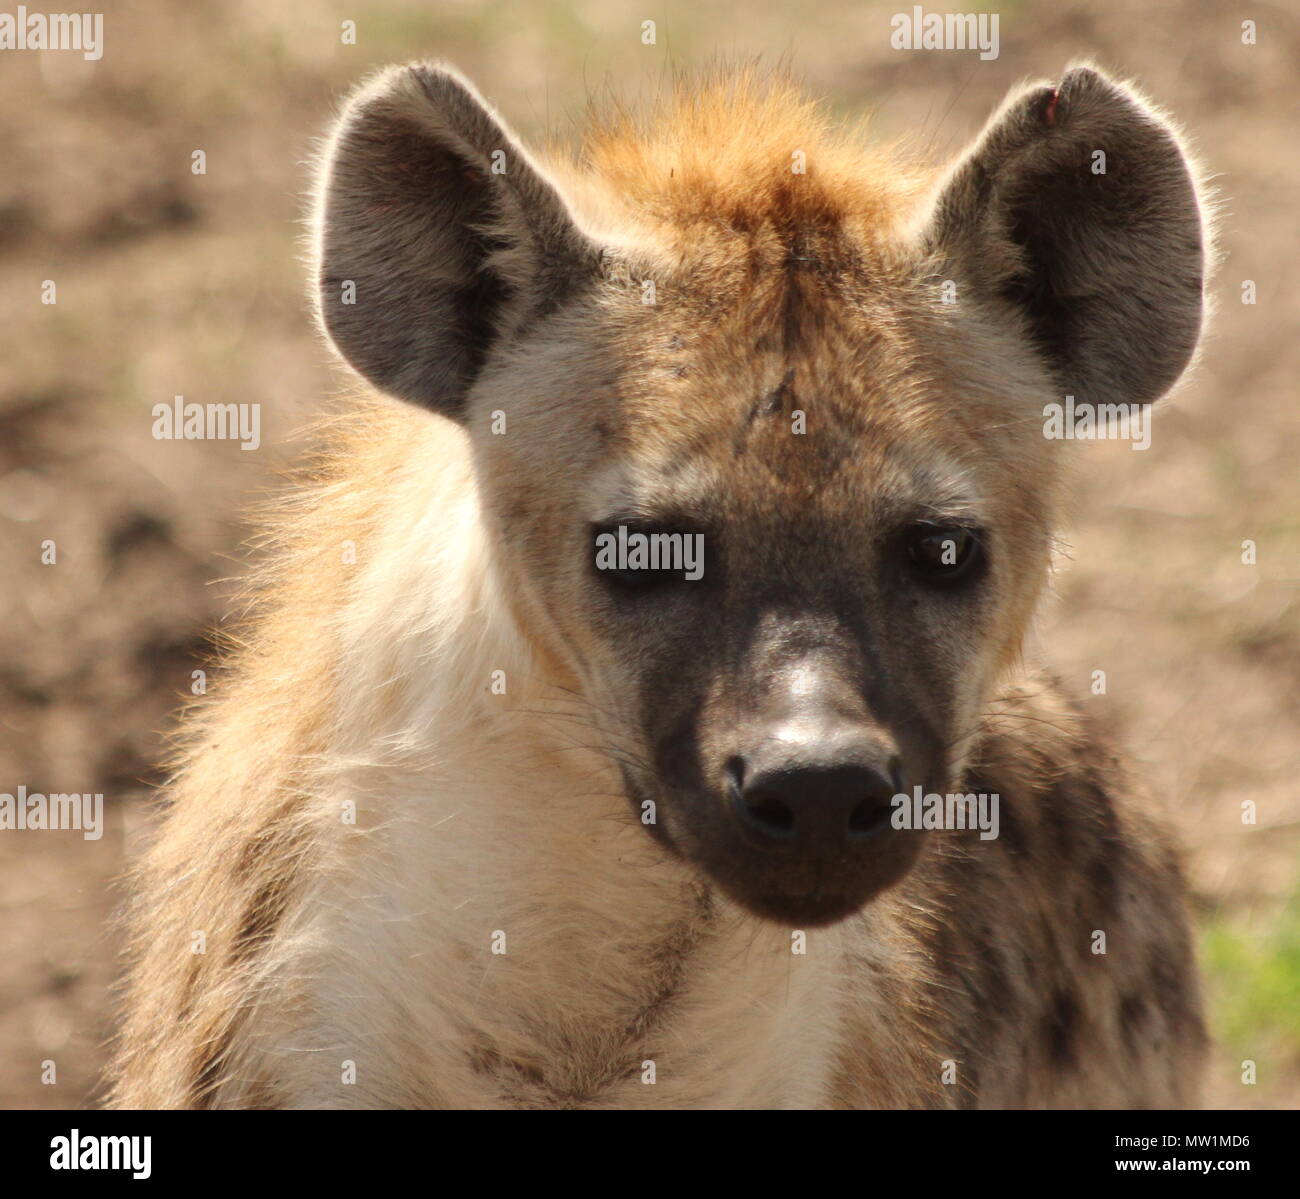 Face of a baby hyena Stock Photo